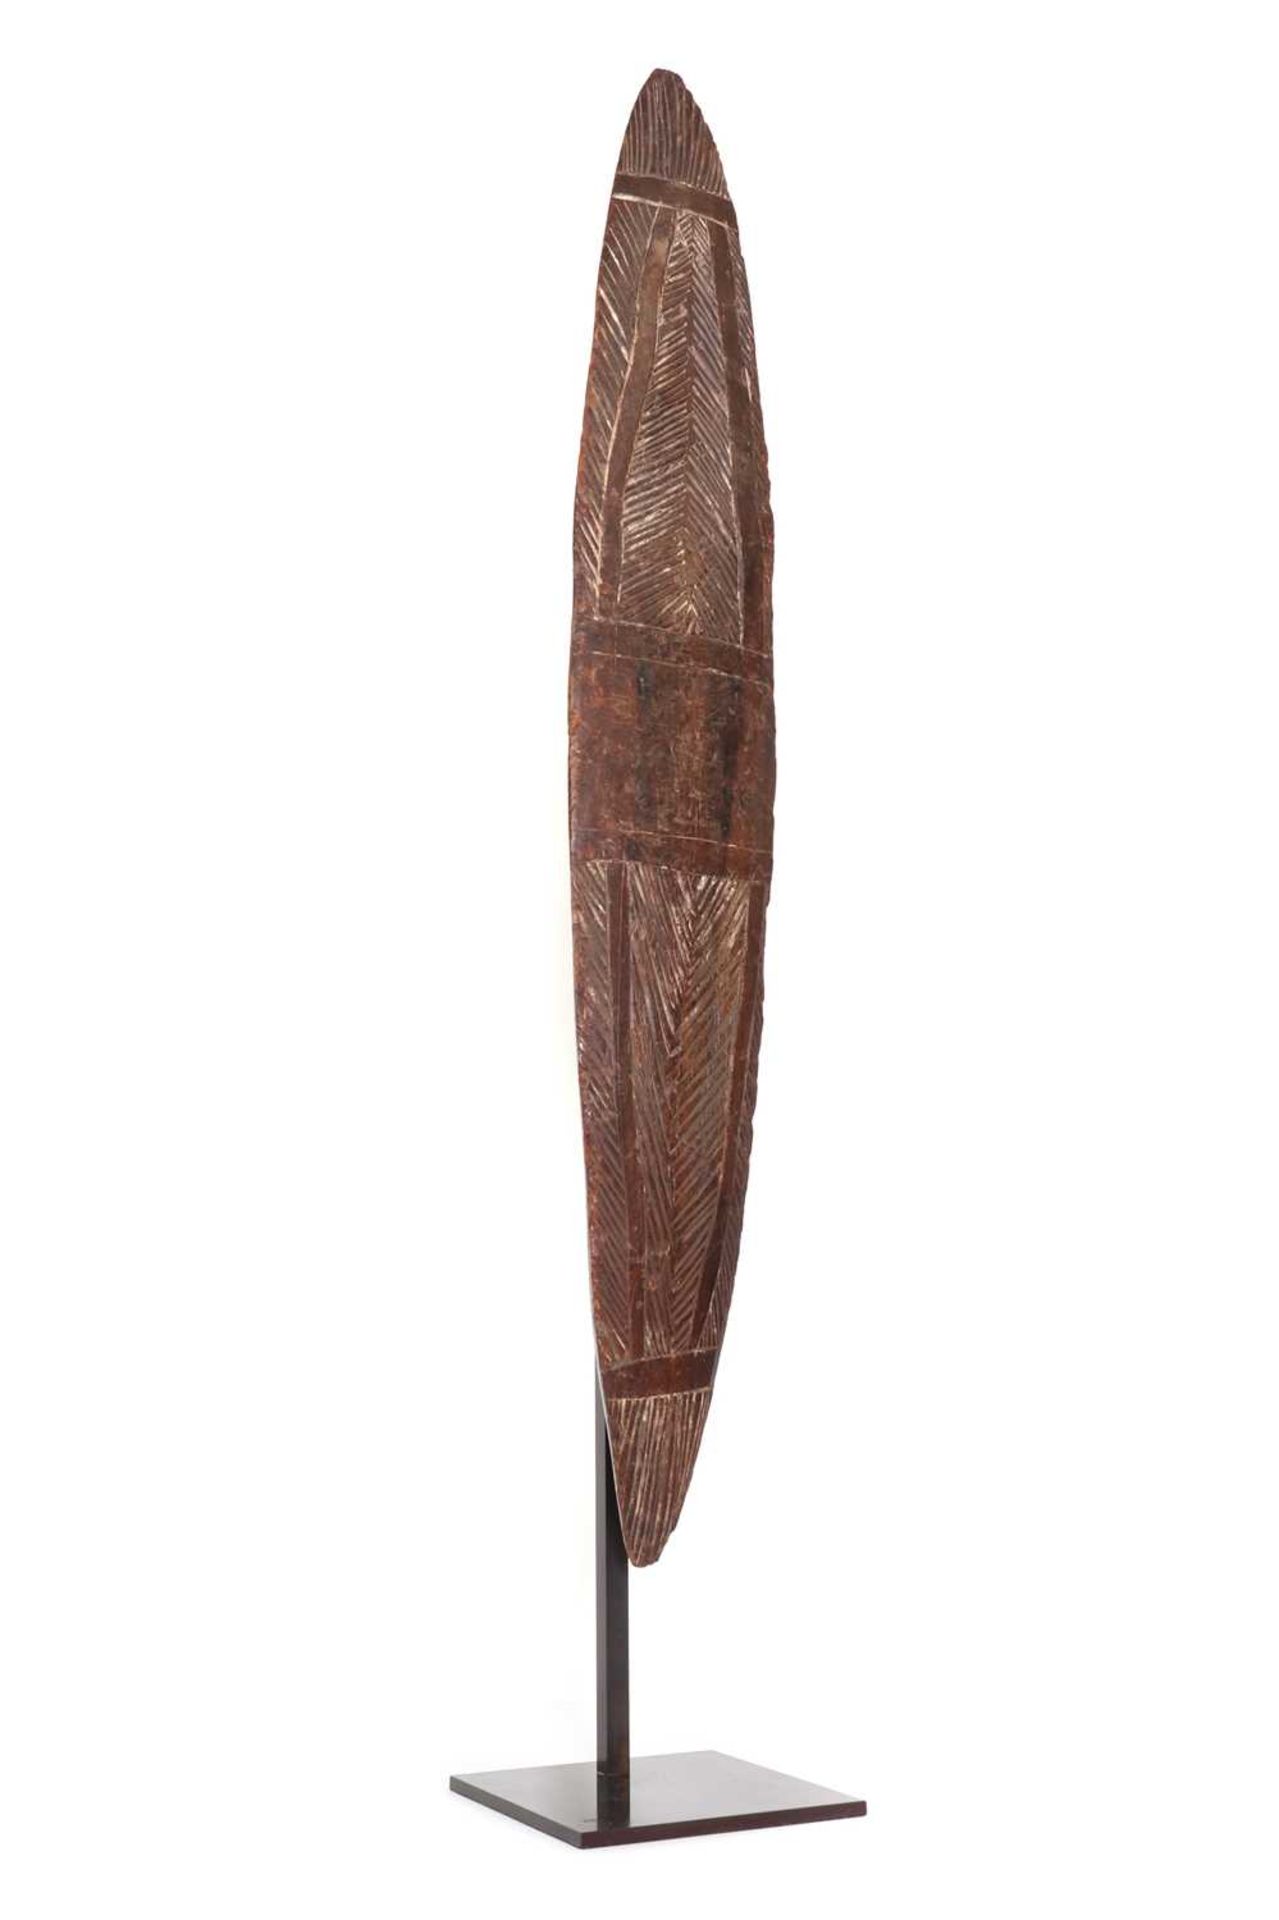 A rare Australian Aboriginal hardwood parrying shield,